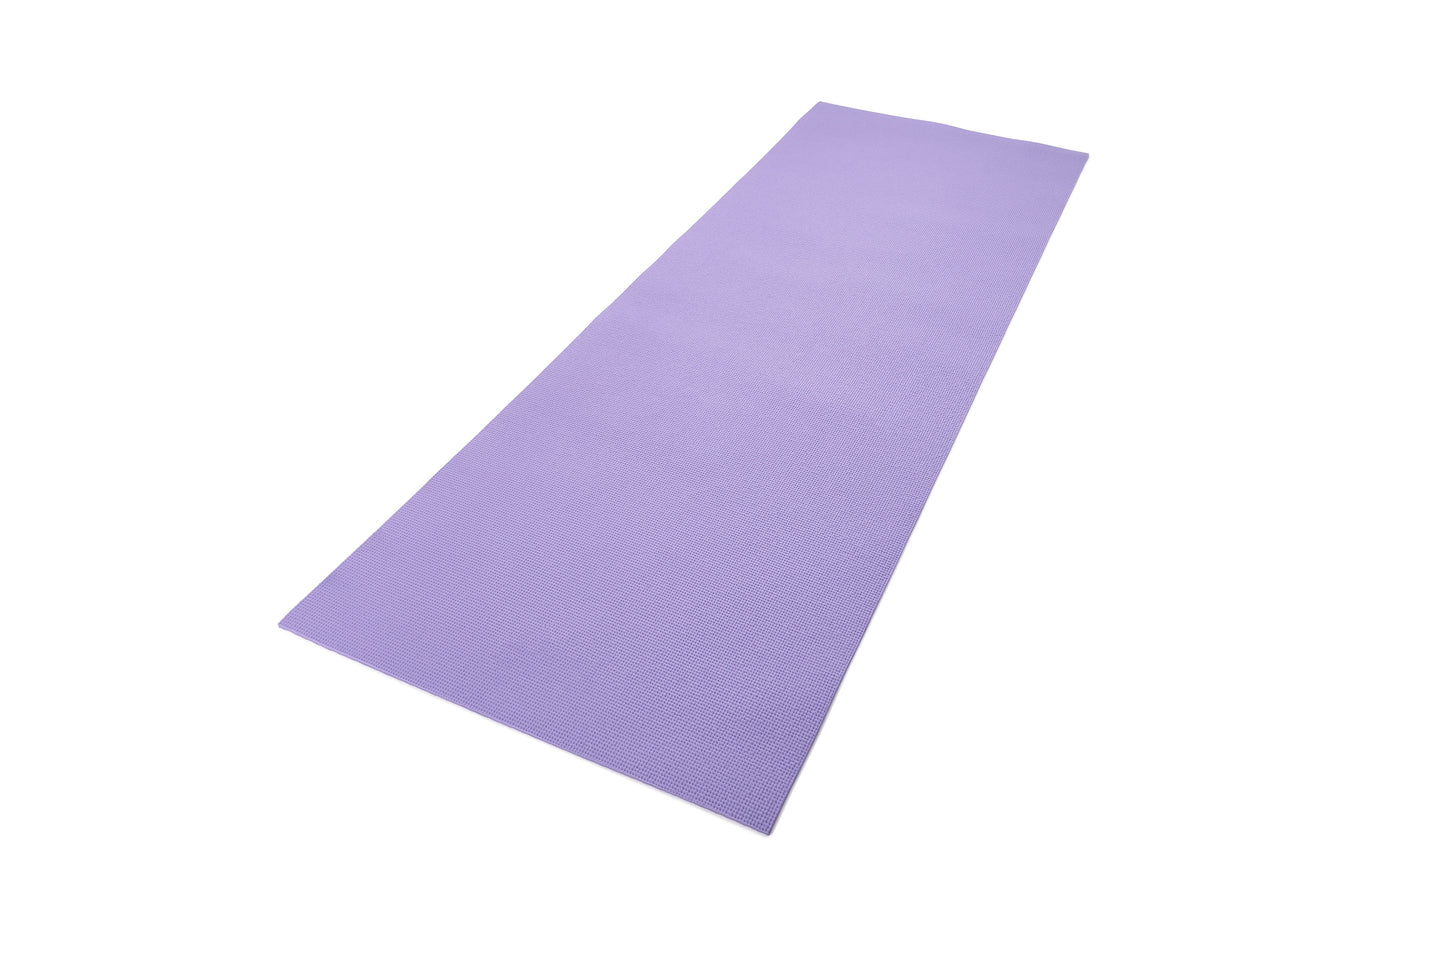 mat para yoga reebok 4 mm lila